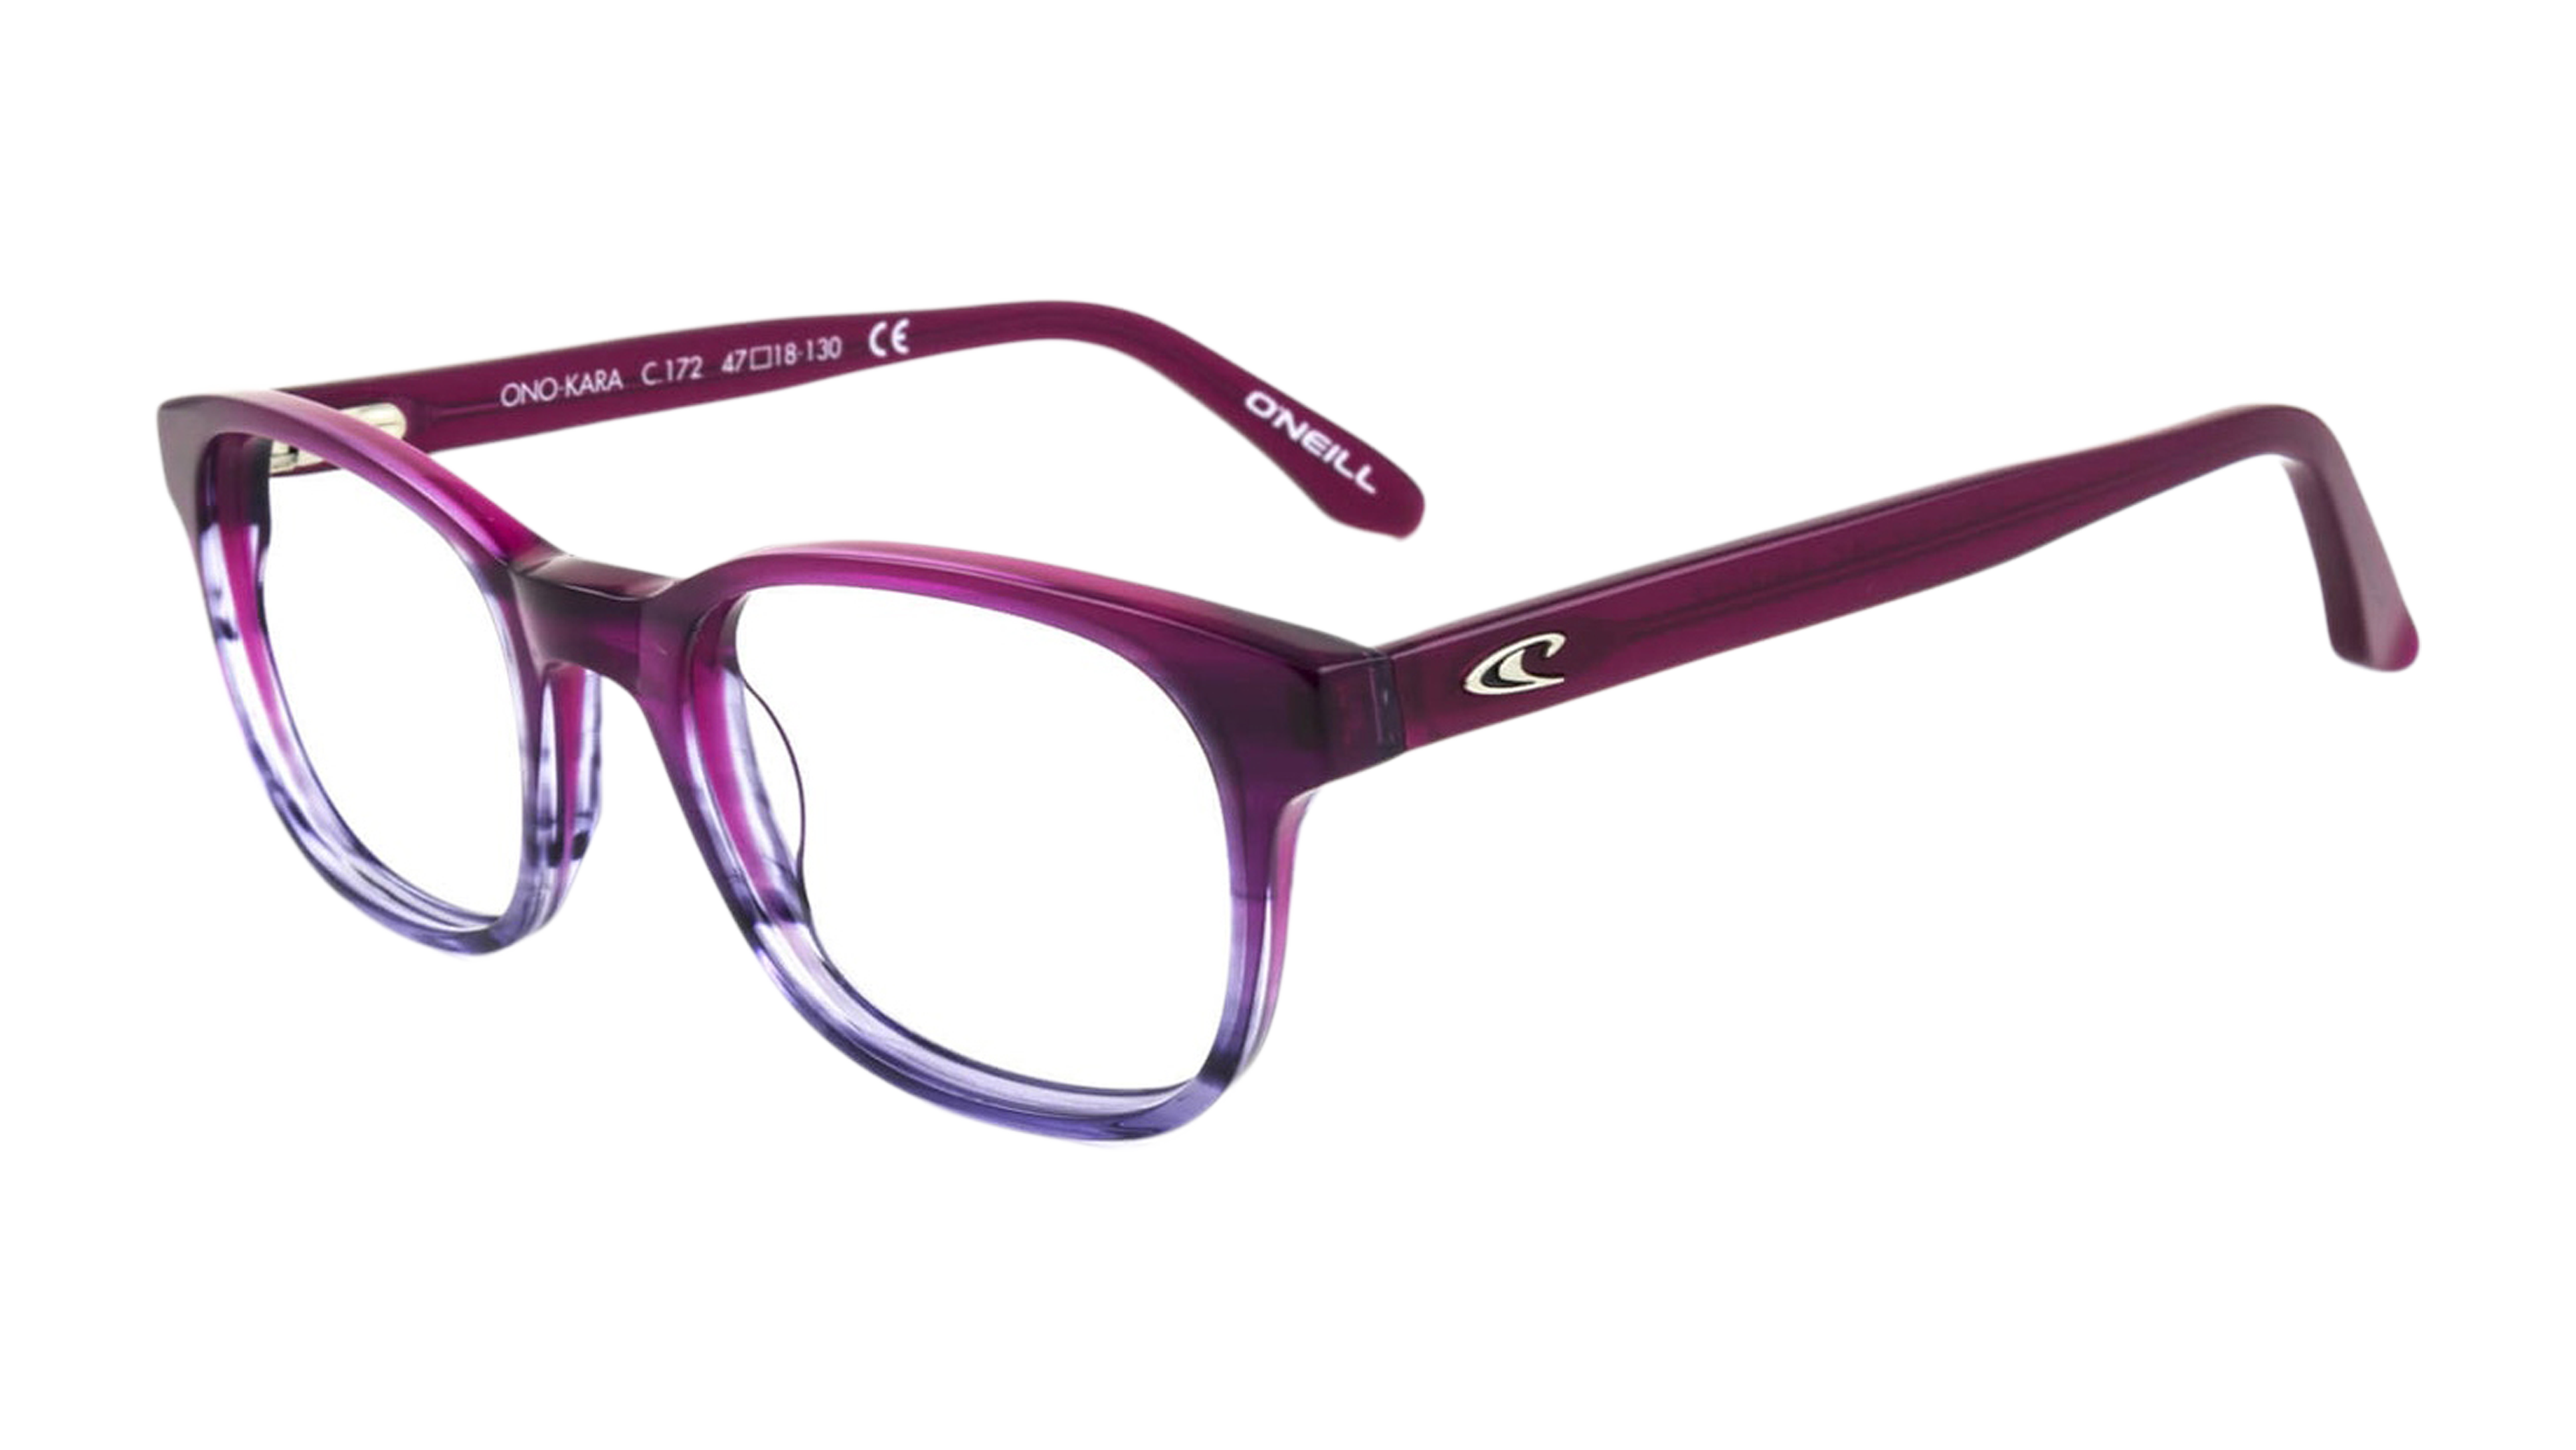 Angle_Left01 O'Neill Kara ONO (172) Children's Glasses Transparent / Purple